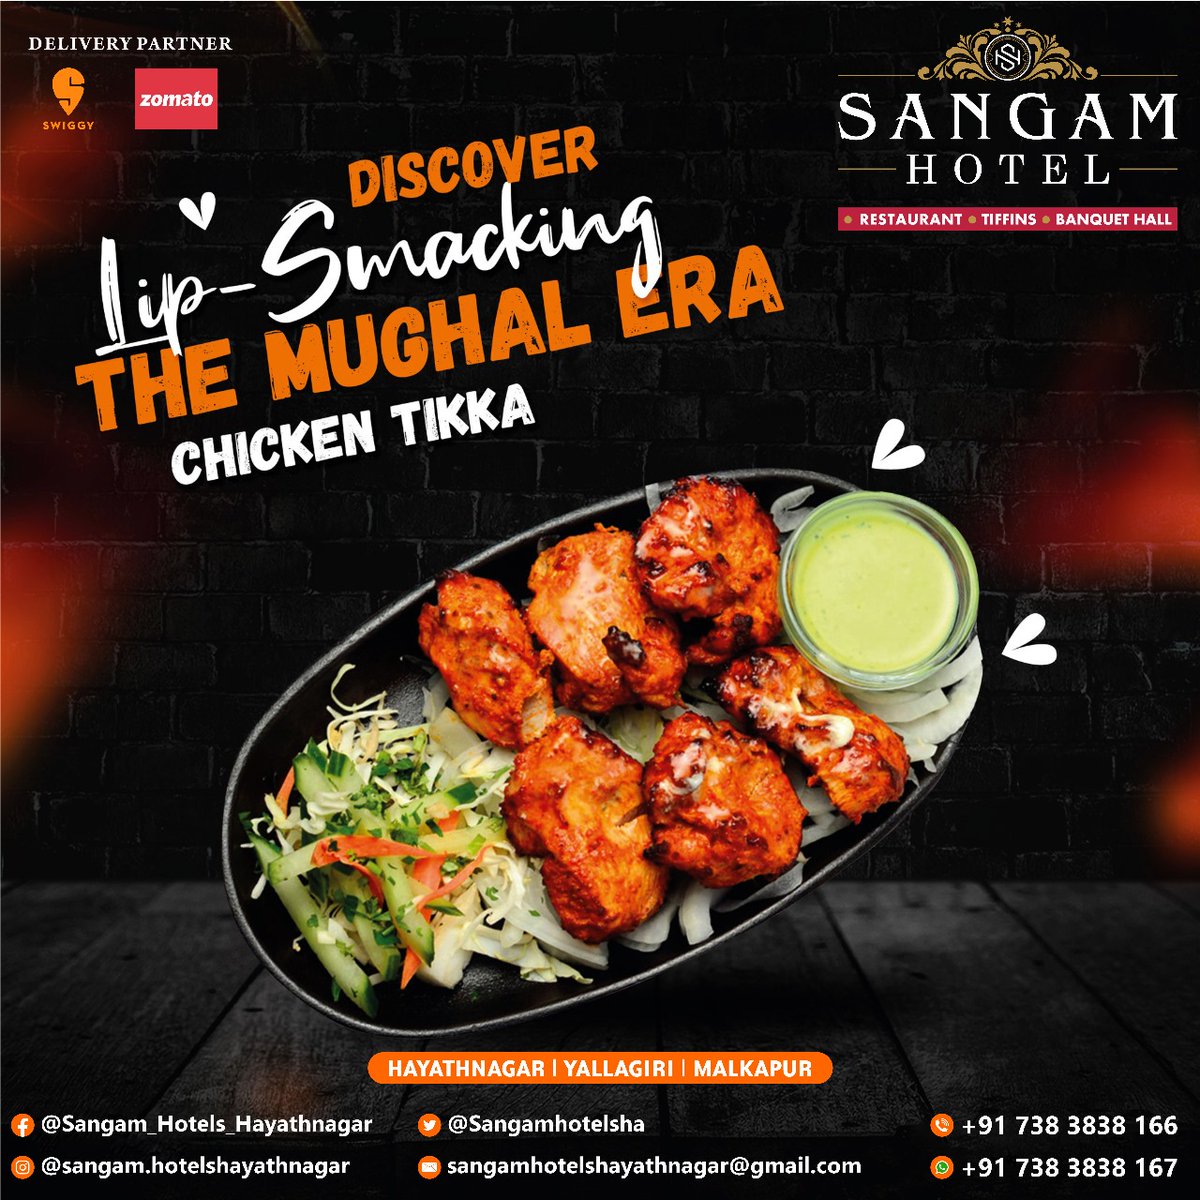 Discover lip Snacking the Mughal Era Chicken Tikka!! @Sangamhotelsha

#chickentikka #chicken #indianfood #foodie #food #foodporn #foodphotography #foodblogger #foodstagram #chickenwings #instafood #foodlover #tandoorichicken #yummy #chickenrecipes #biryani #chickentikkamasala